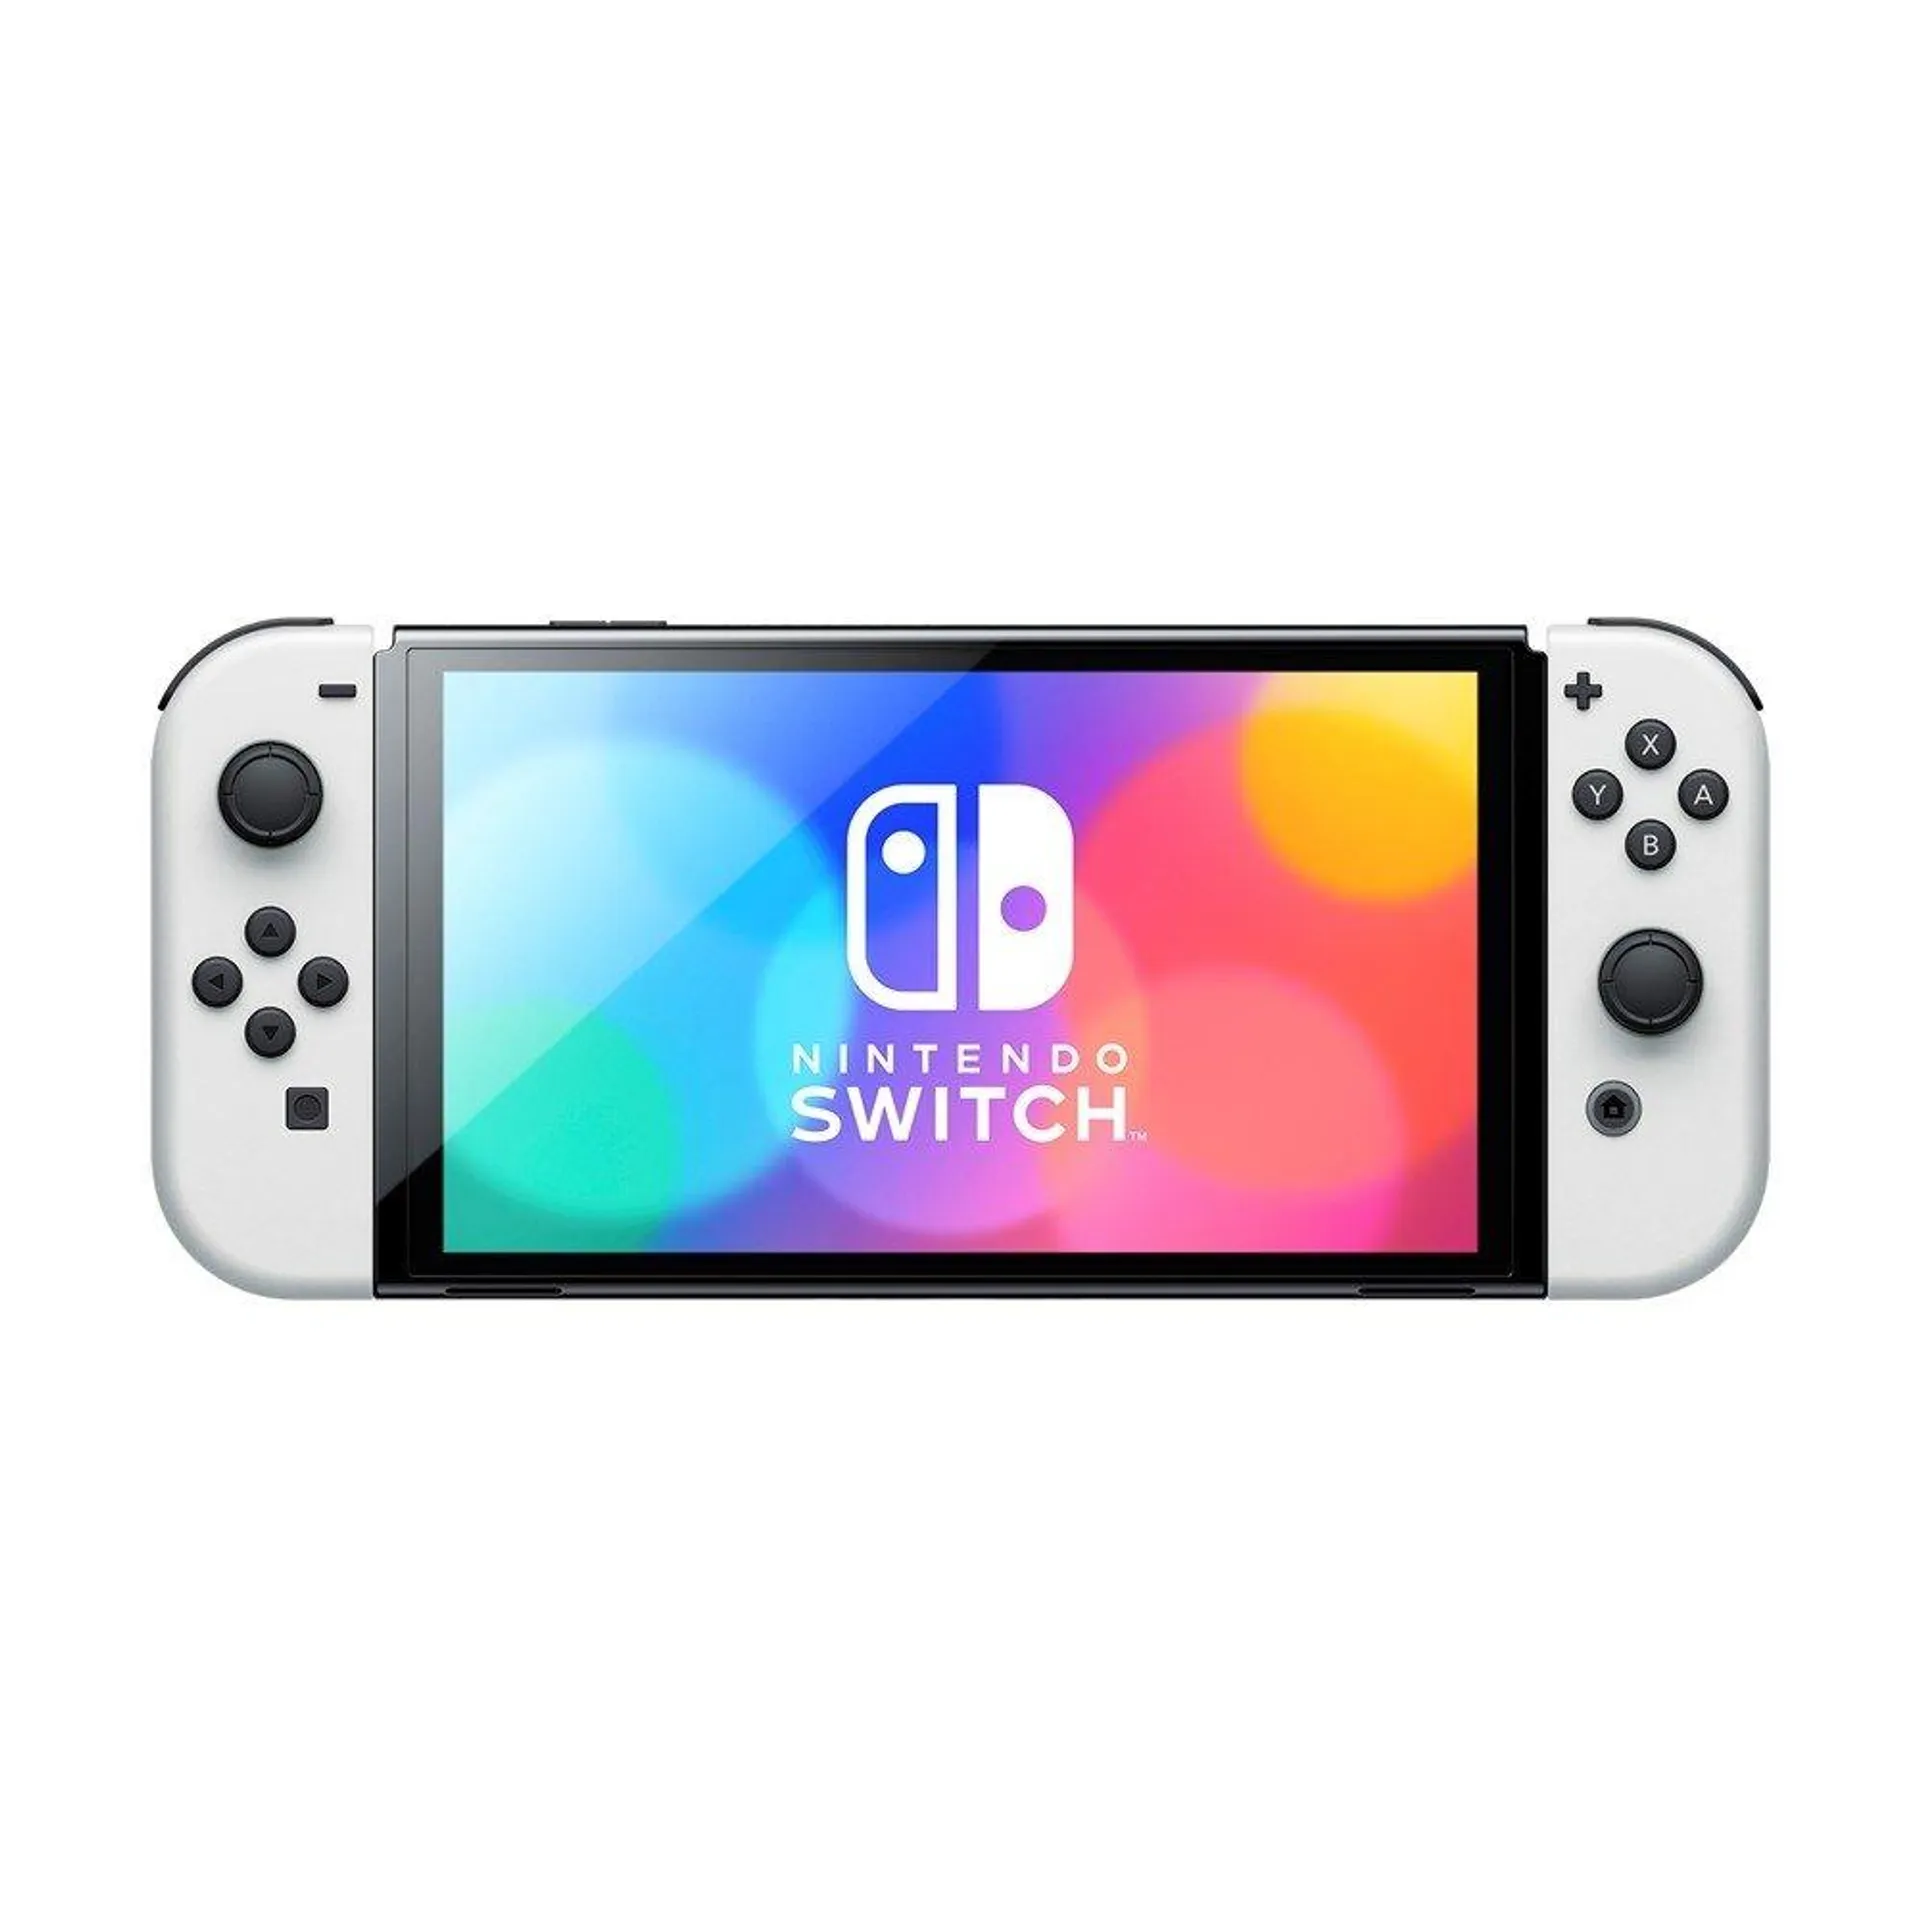 Console Nintendo Switch 64GB Oled com Controle Joy-Con Branco (Código 583910)